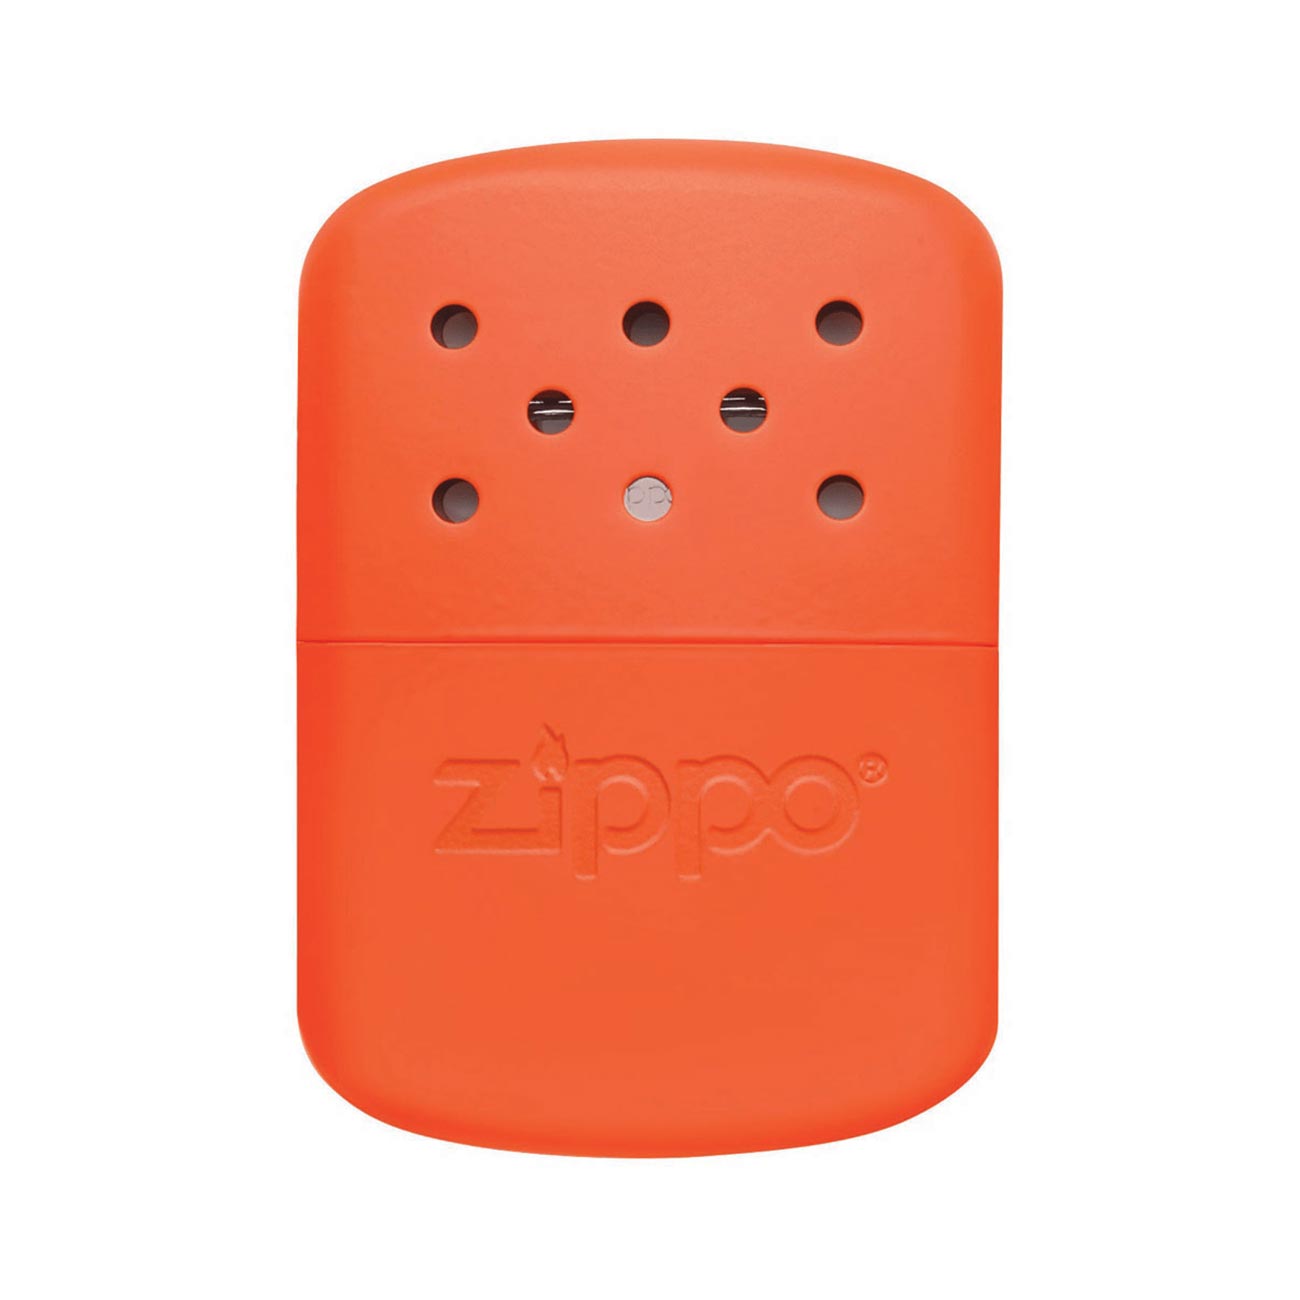 Zippo 12-Hour Refillable Hand Warmer - Blaze Orange